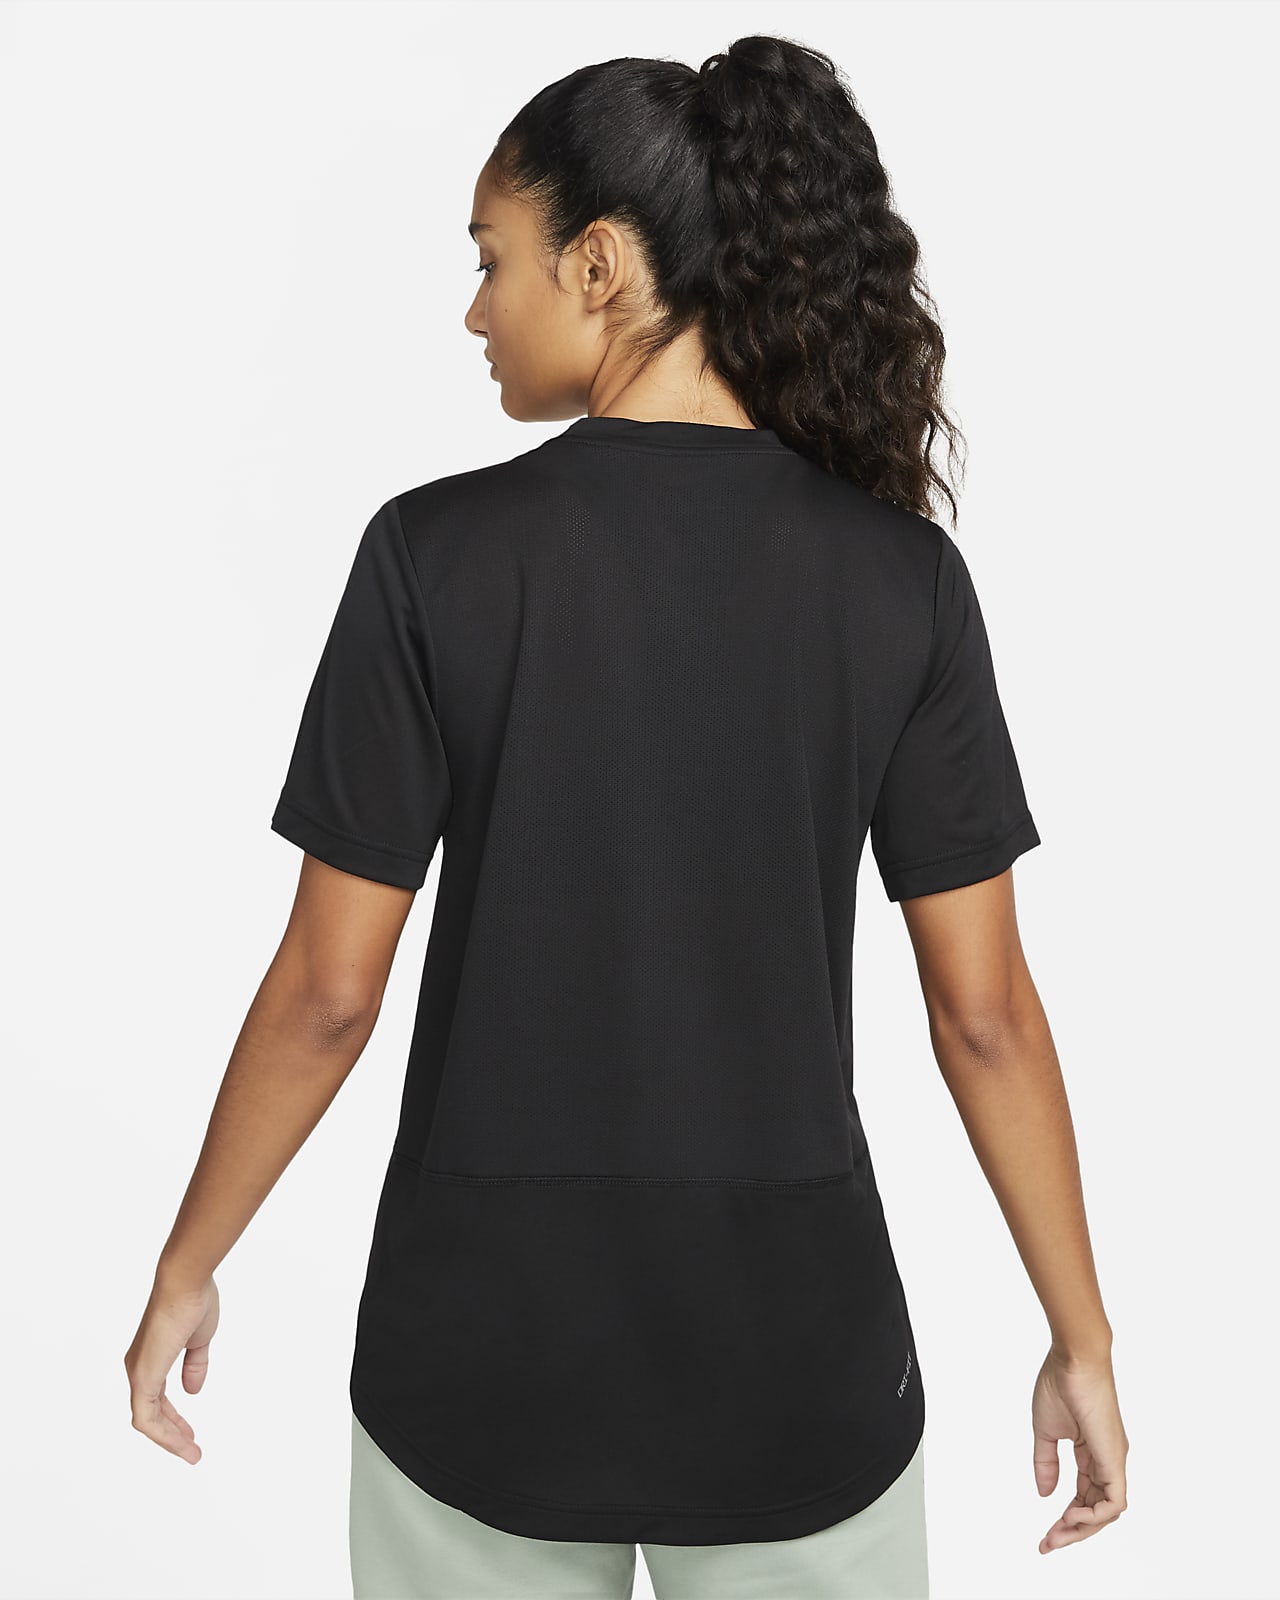 Nike Dri-FIT Practice Women's Short-Sleeve Top.